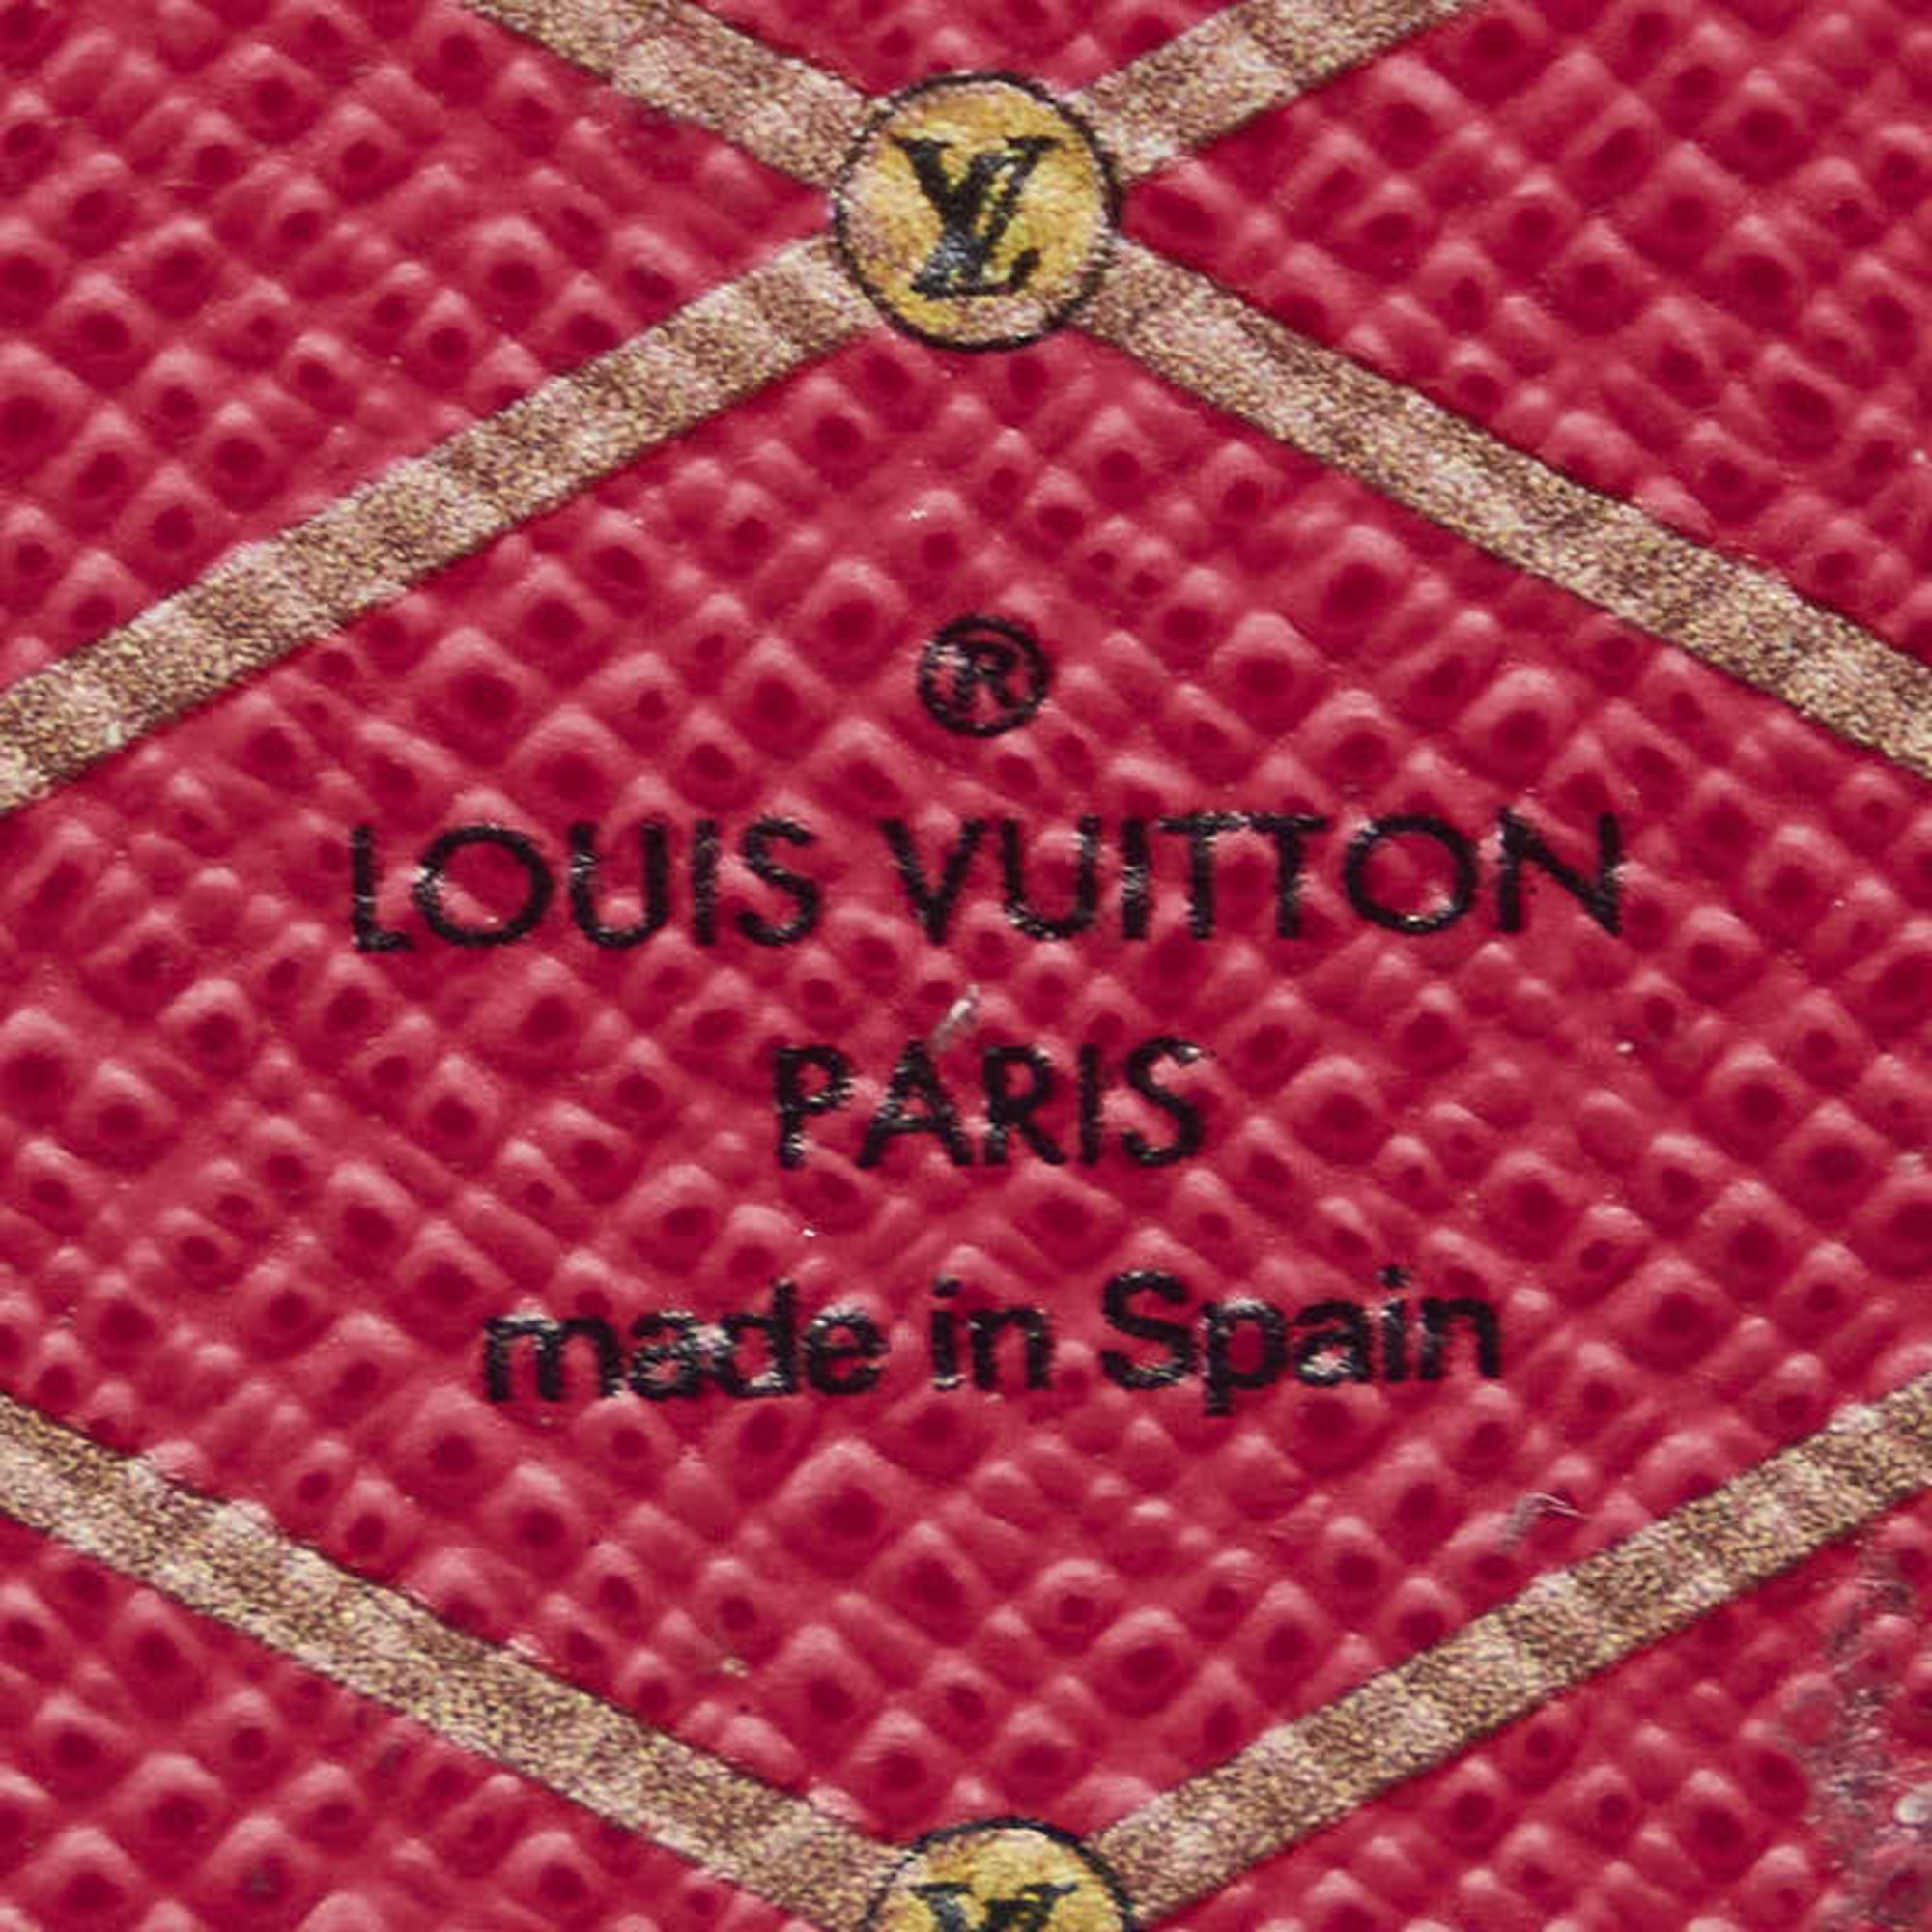 Louis Vuitton Monogram Summer Trunk Pochette Weekend Long Wallet Chain M62456 Brown PVC Women's LOUIS VUITTON